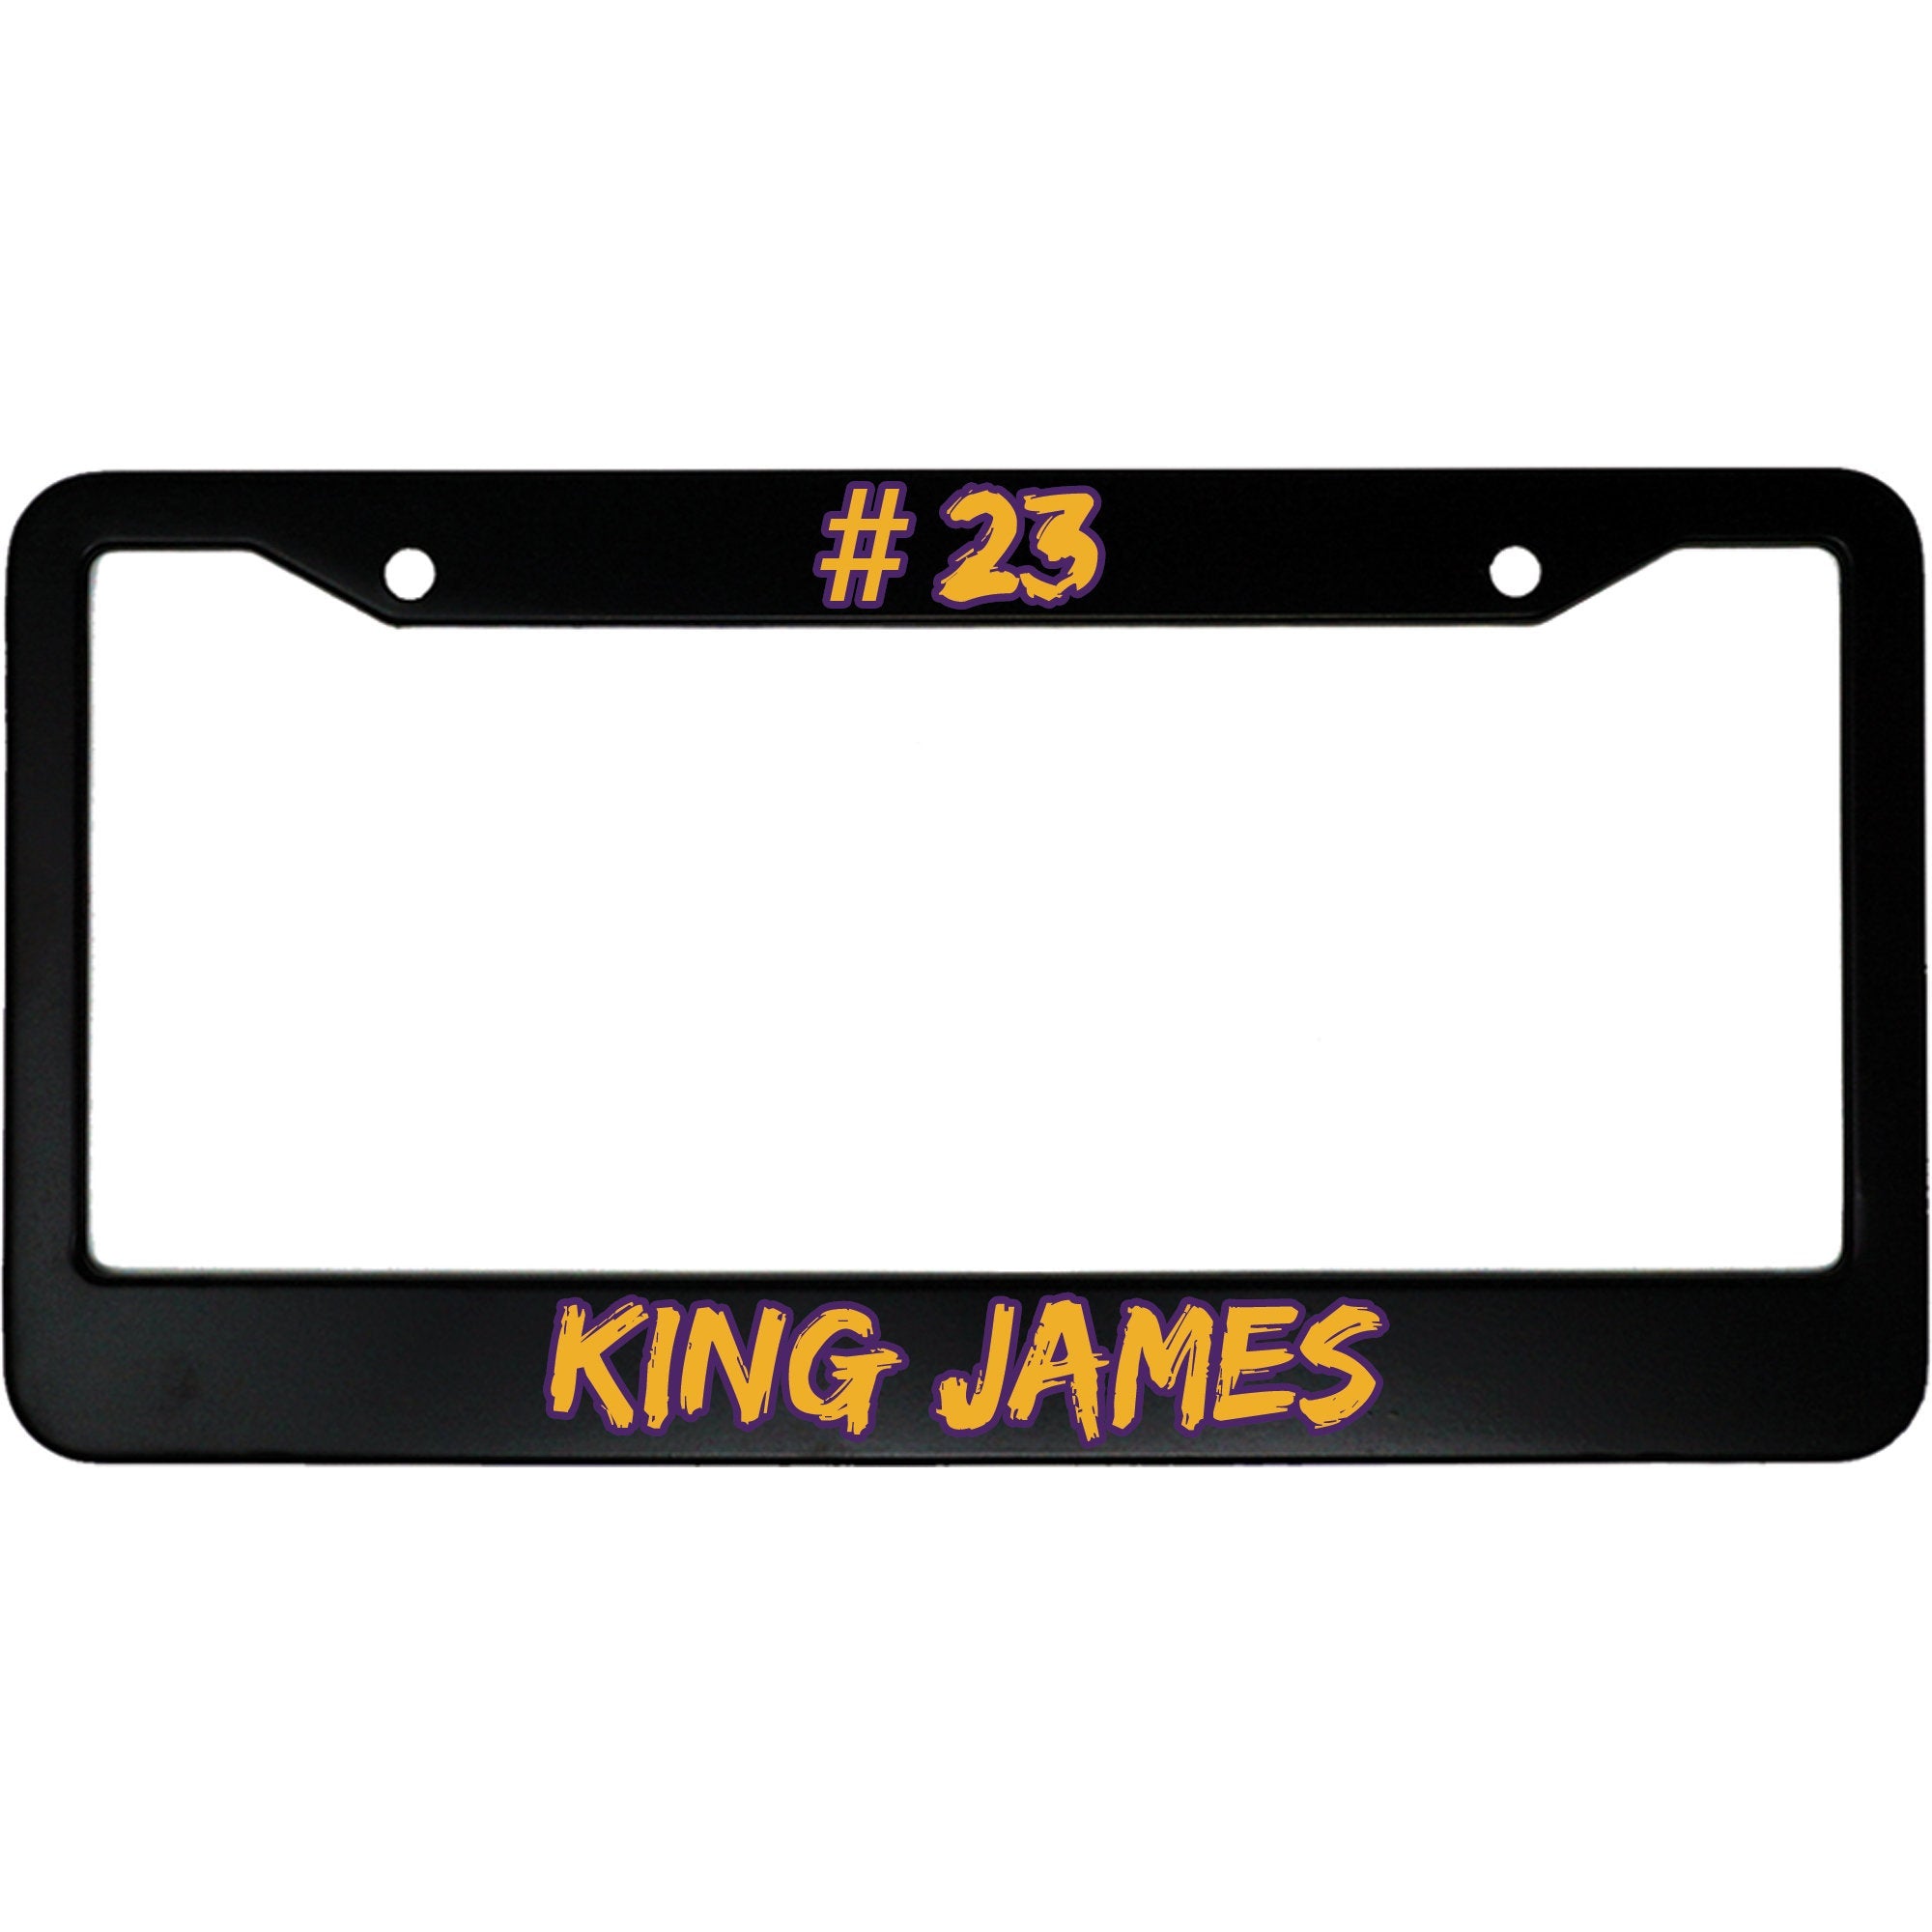 #23 King James